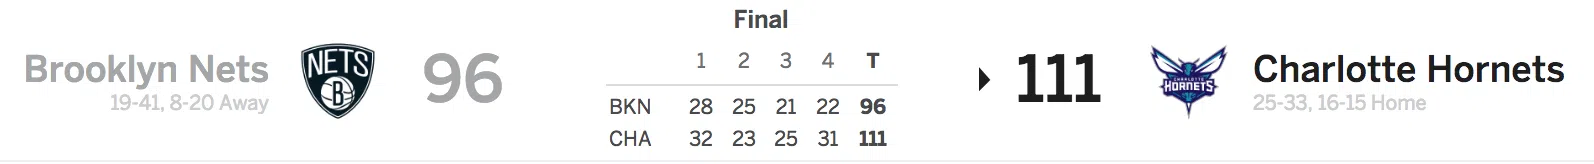 Brooklyn Nets at Charlotte Hornets 2-22-18 Score